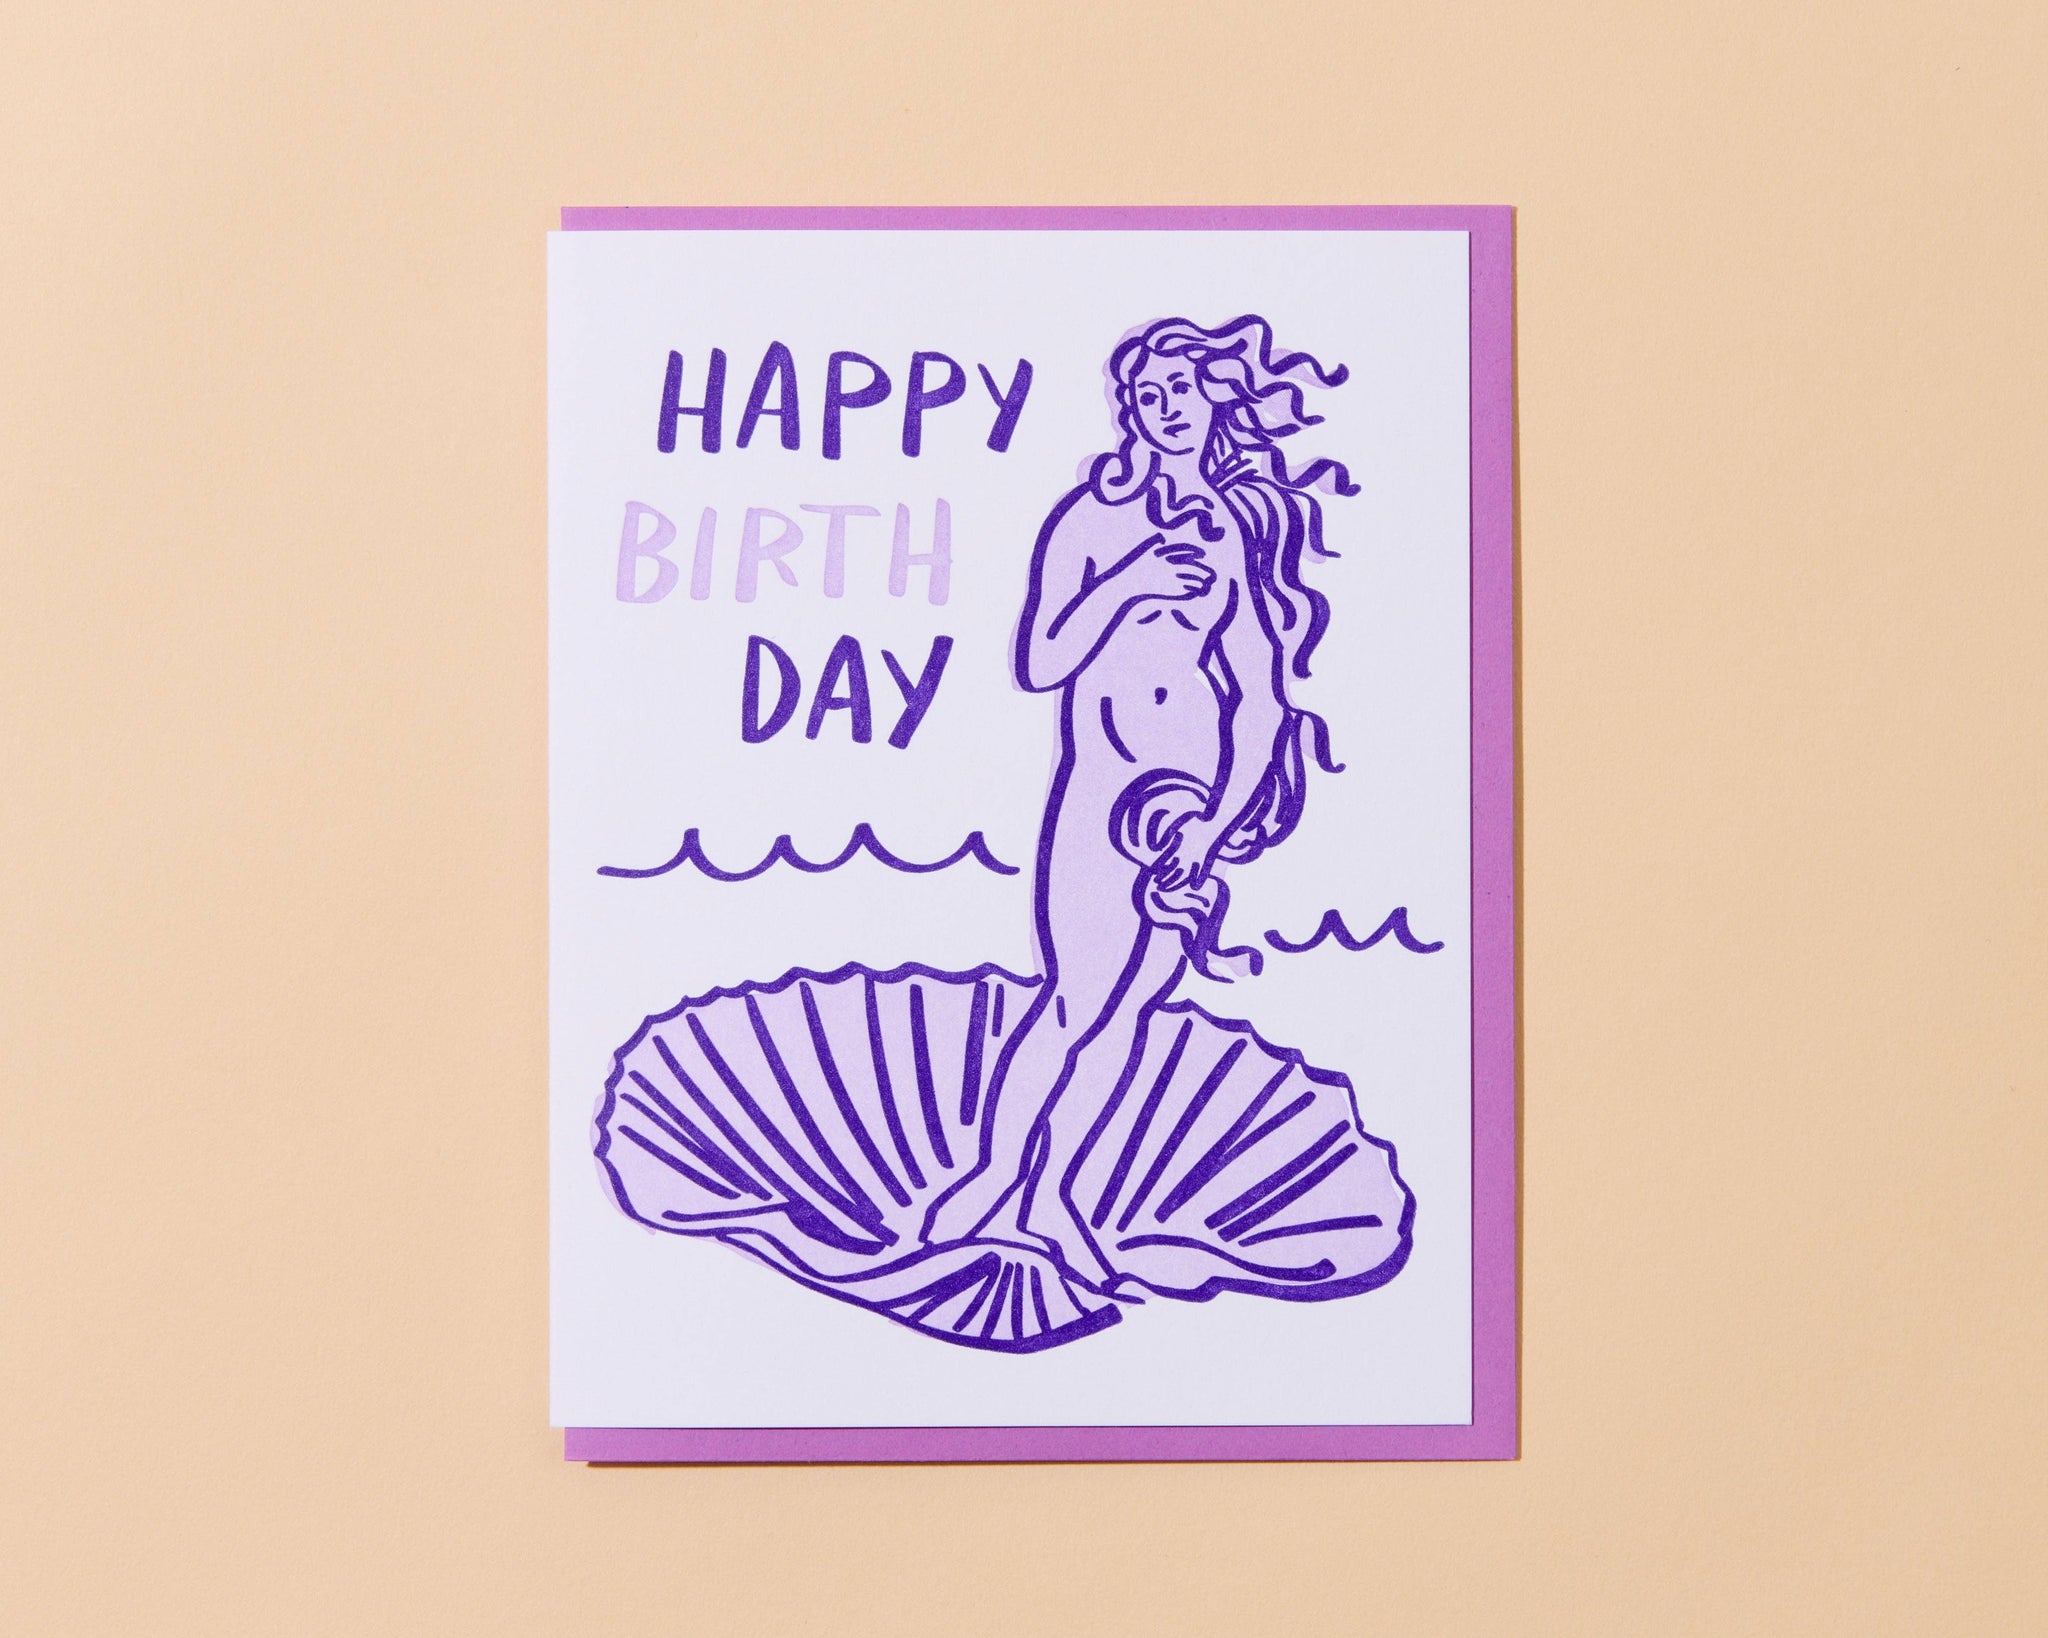 Birth (of Venus) Day Card